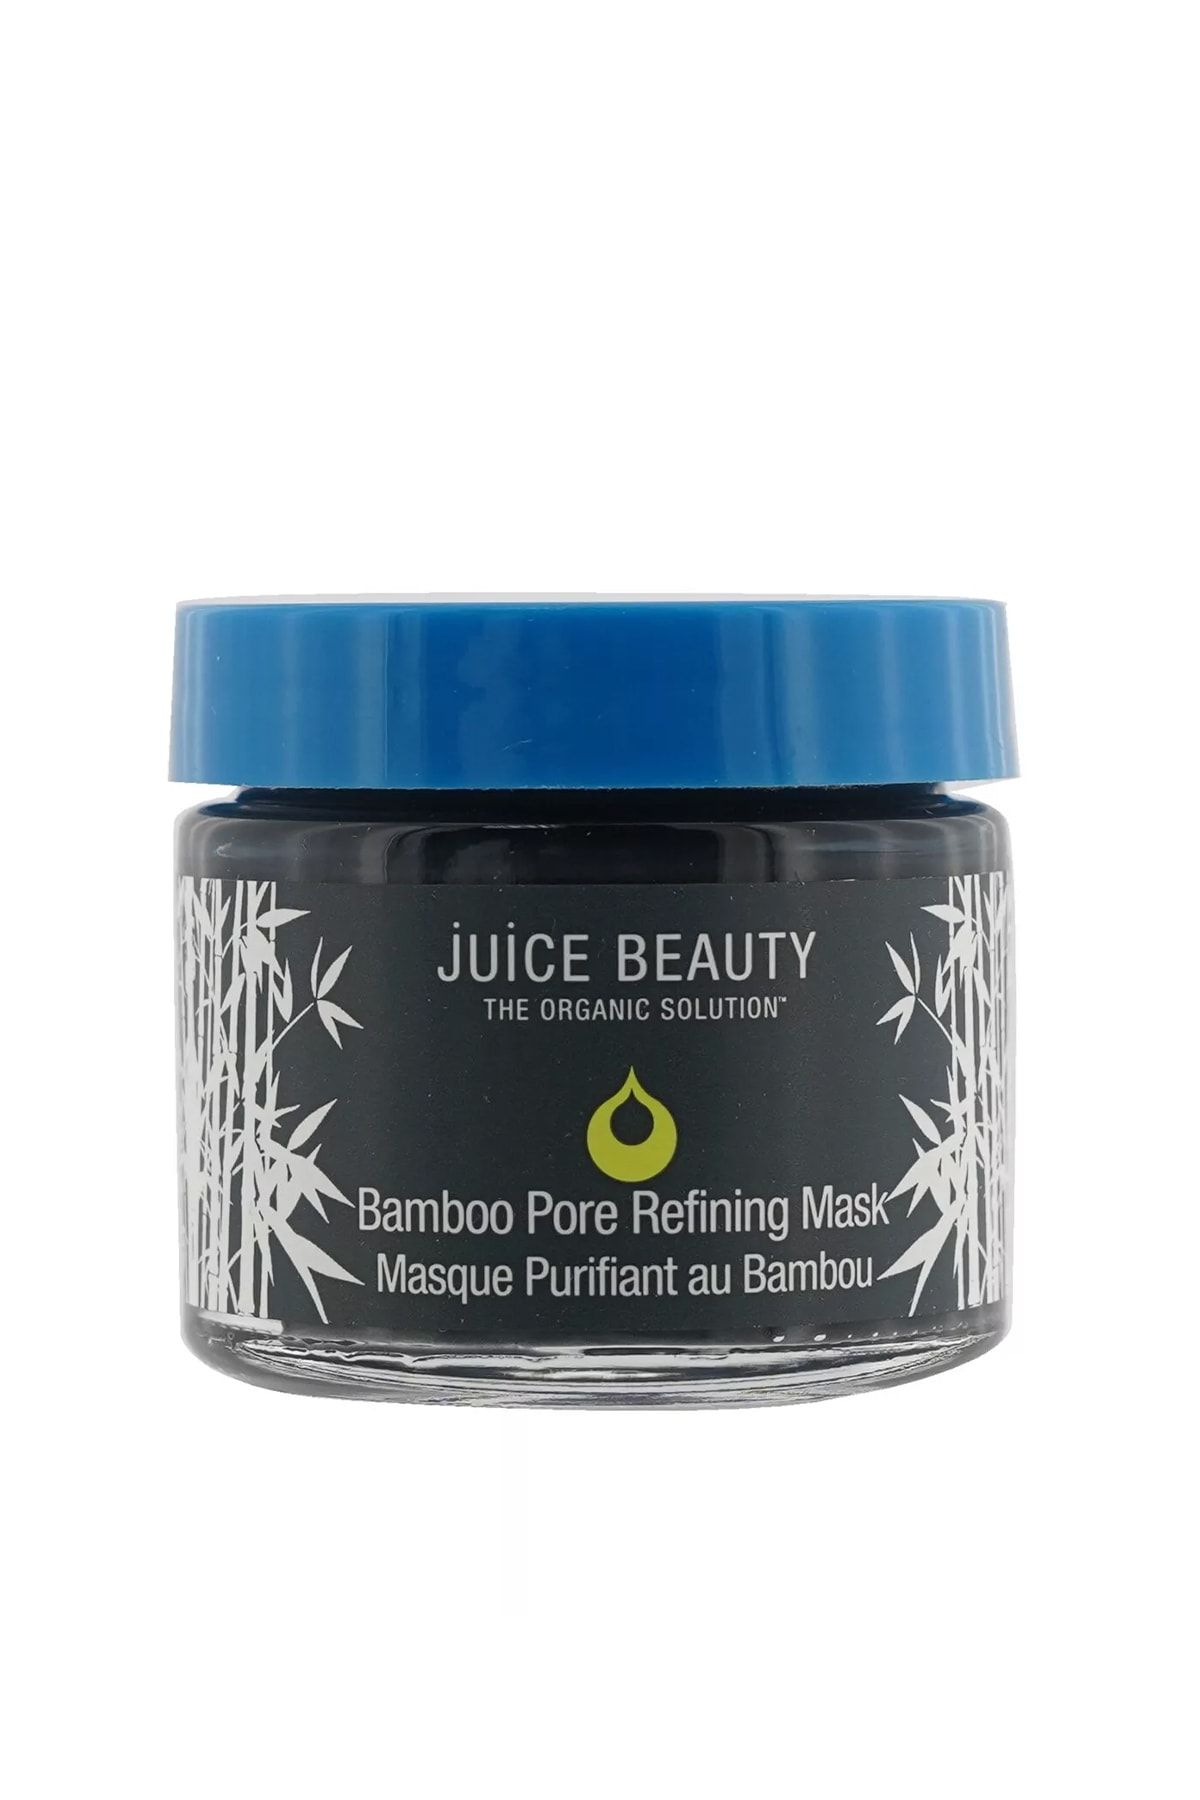 Juice Beauty Bamboo Pore Refining Mask - 60 Ml